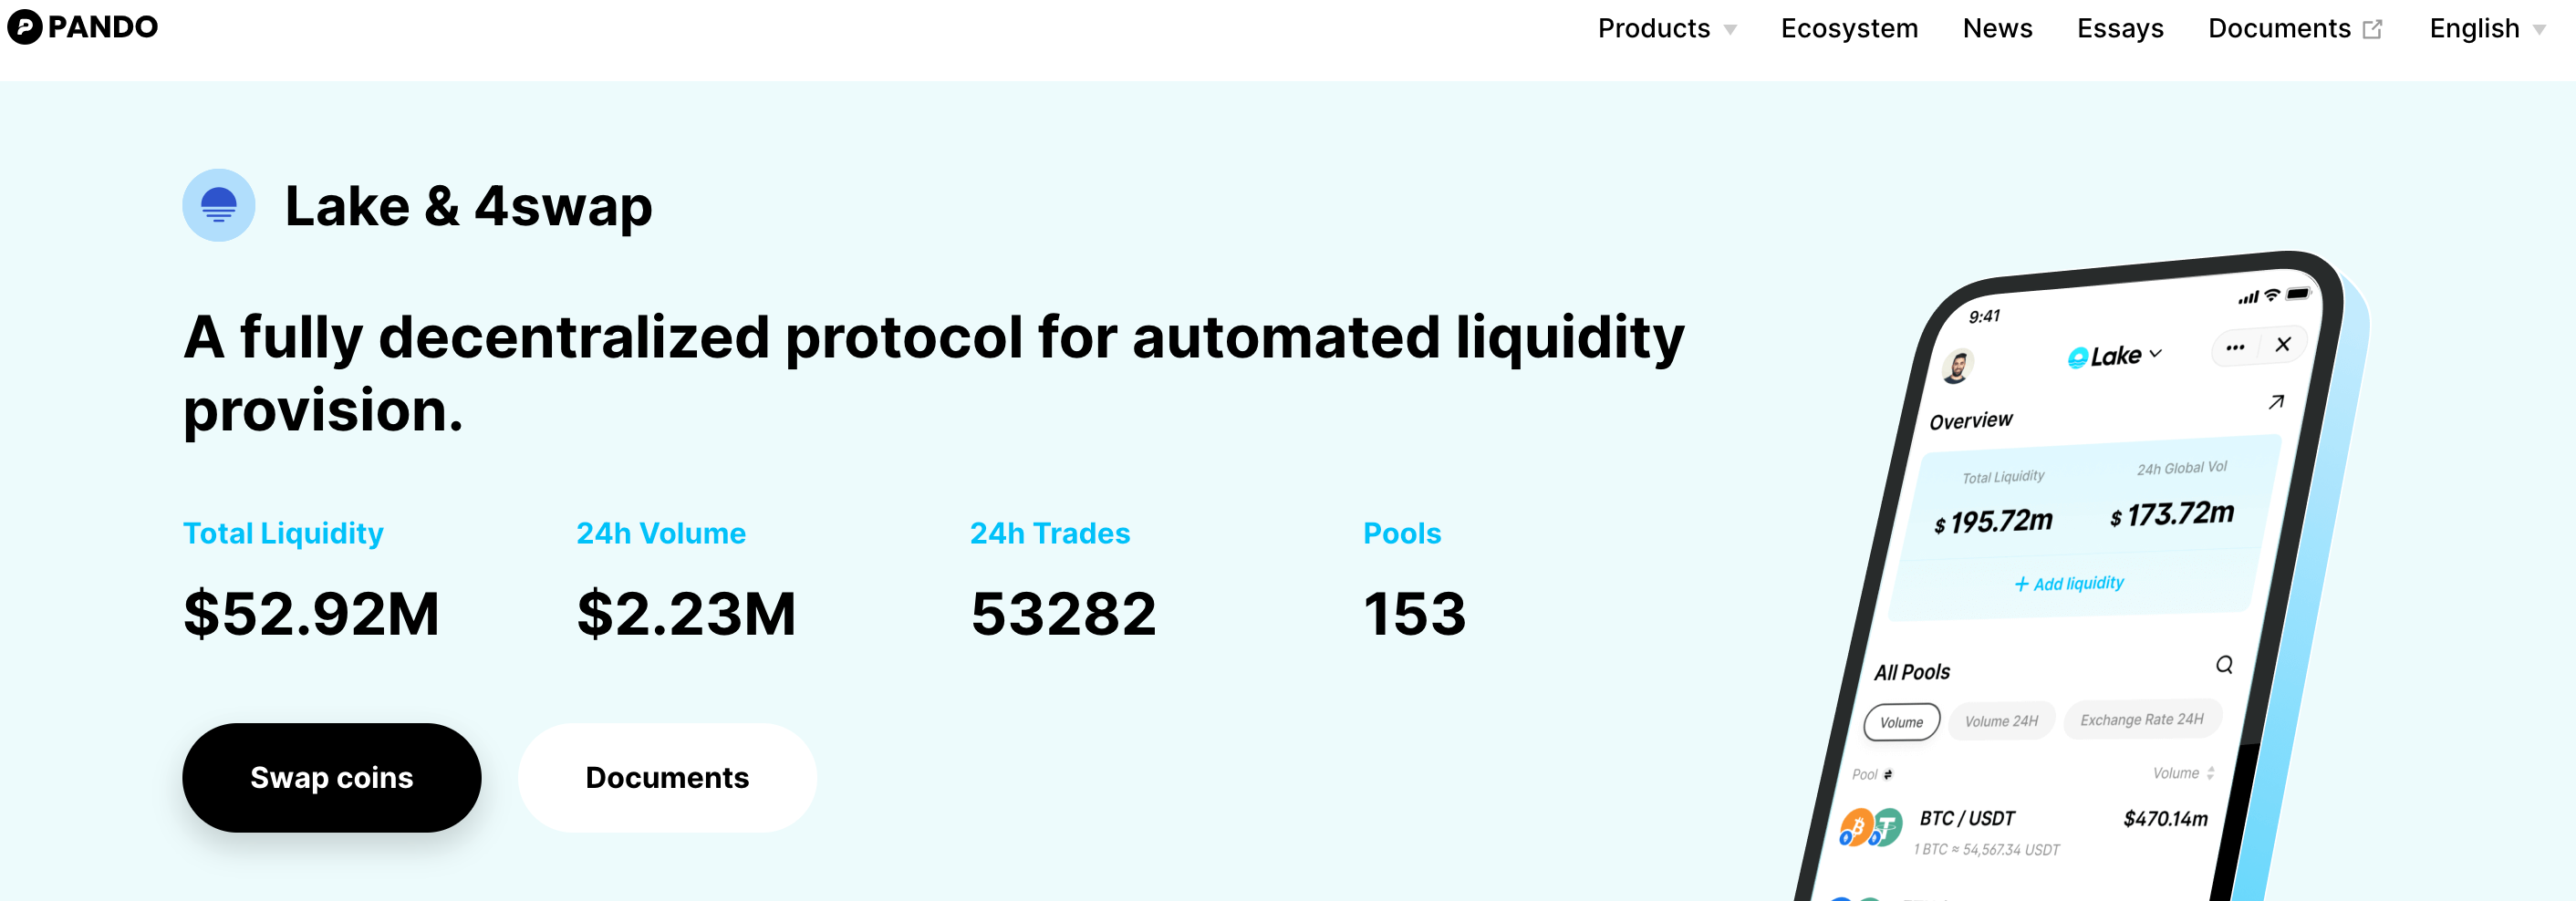 Lake Product Page Screenshot